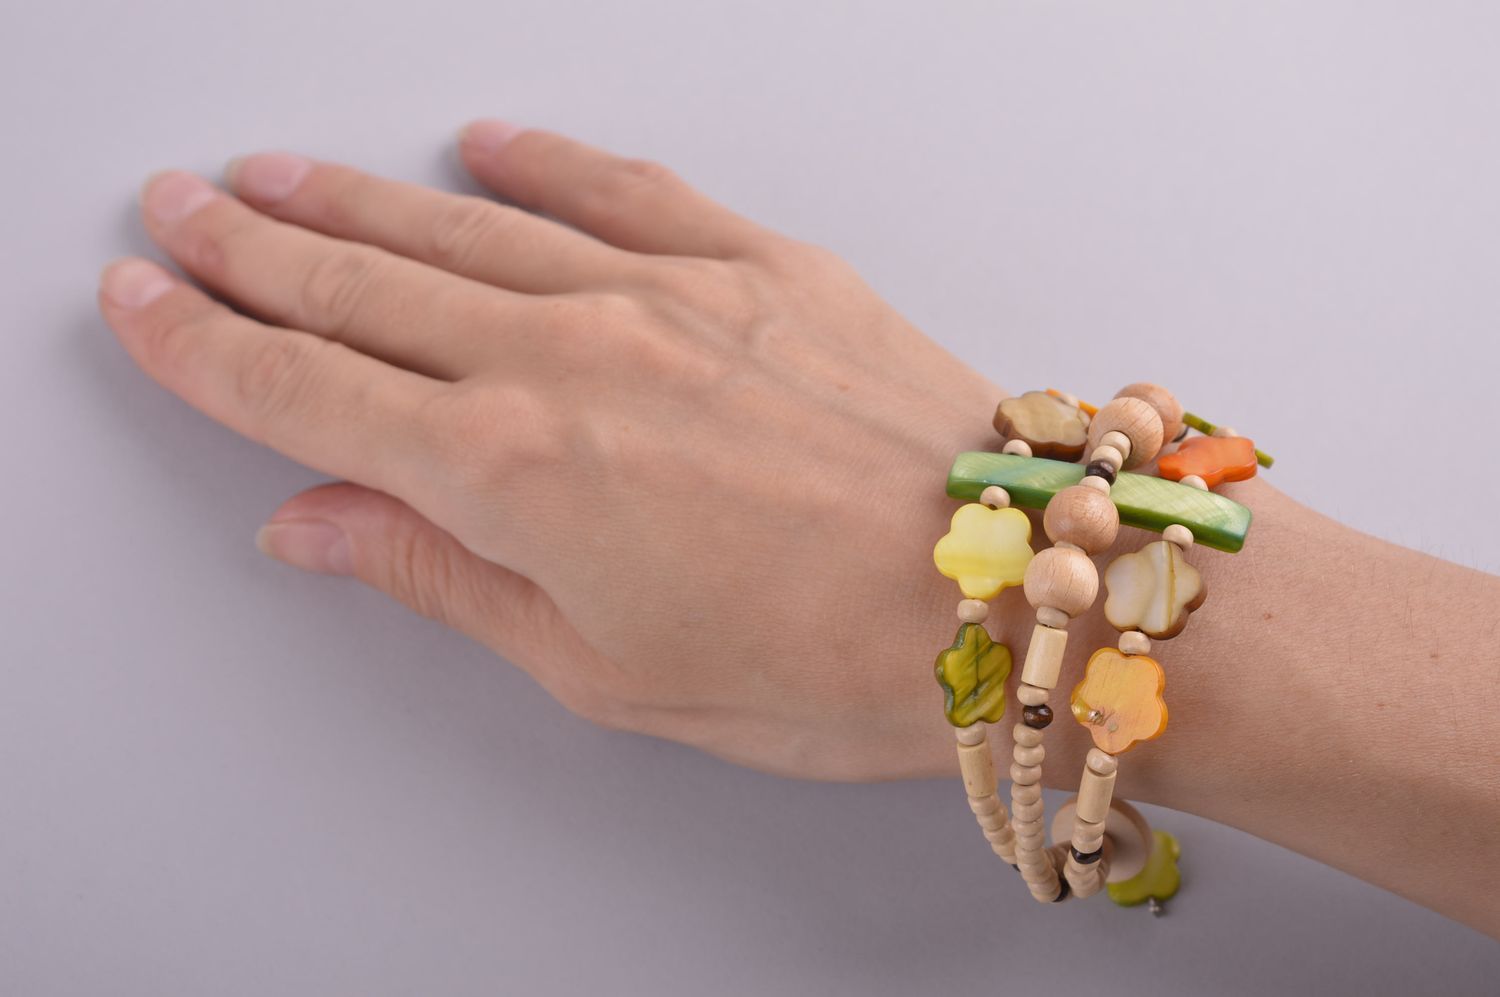 Homemade wooden beads three-row wrist bracelet for women photo 5